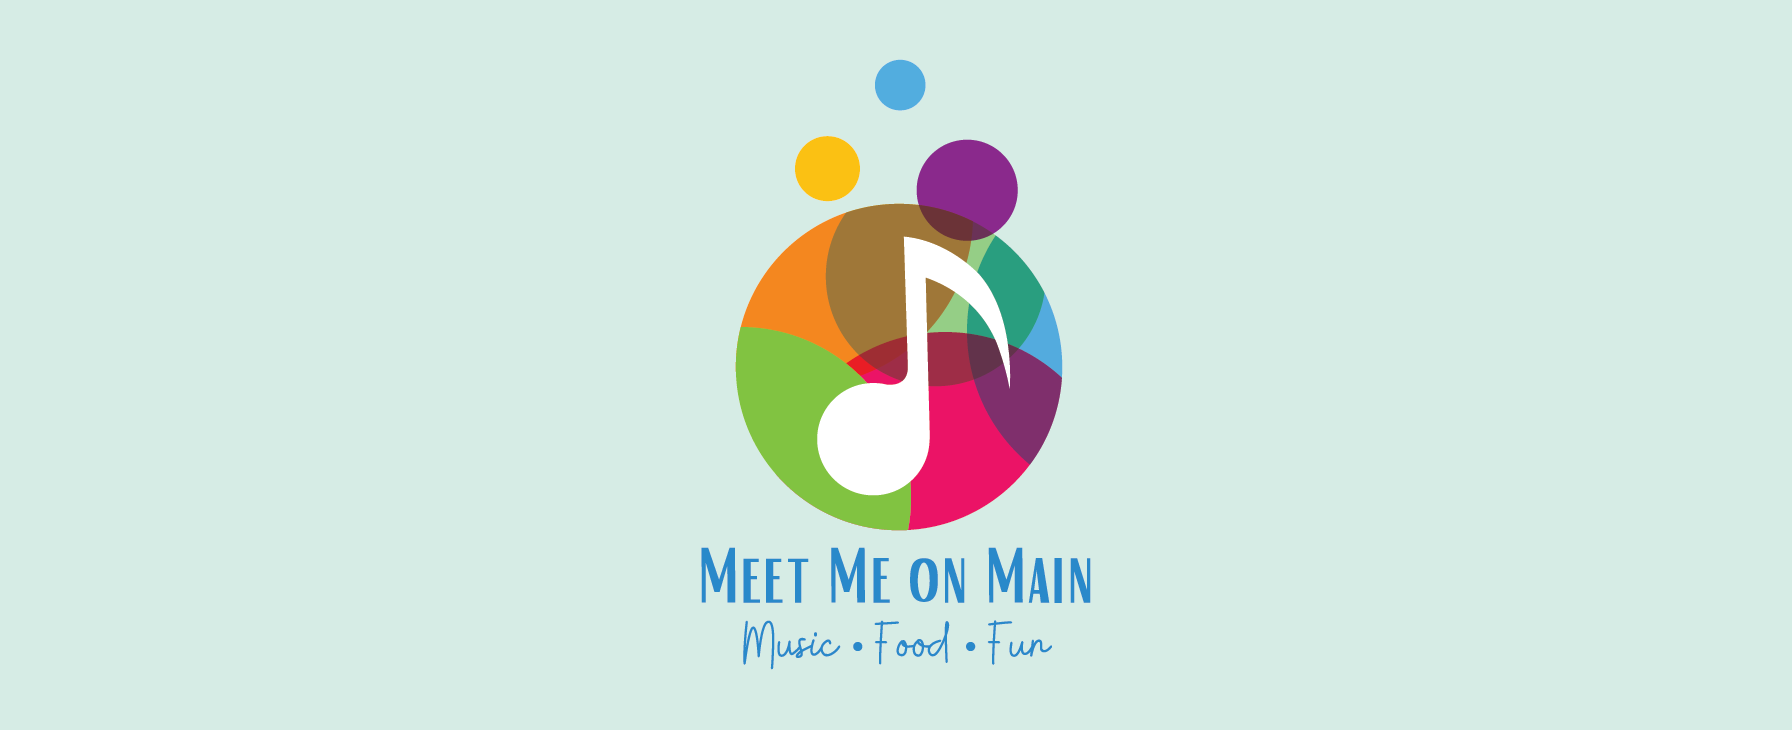 Meet me on Main logo